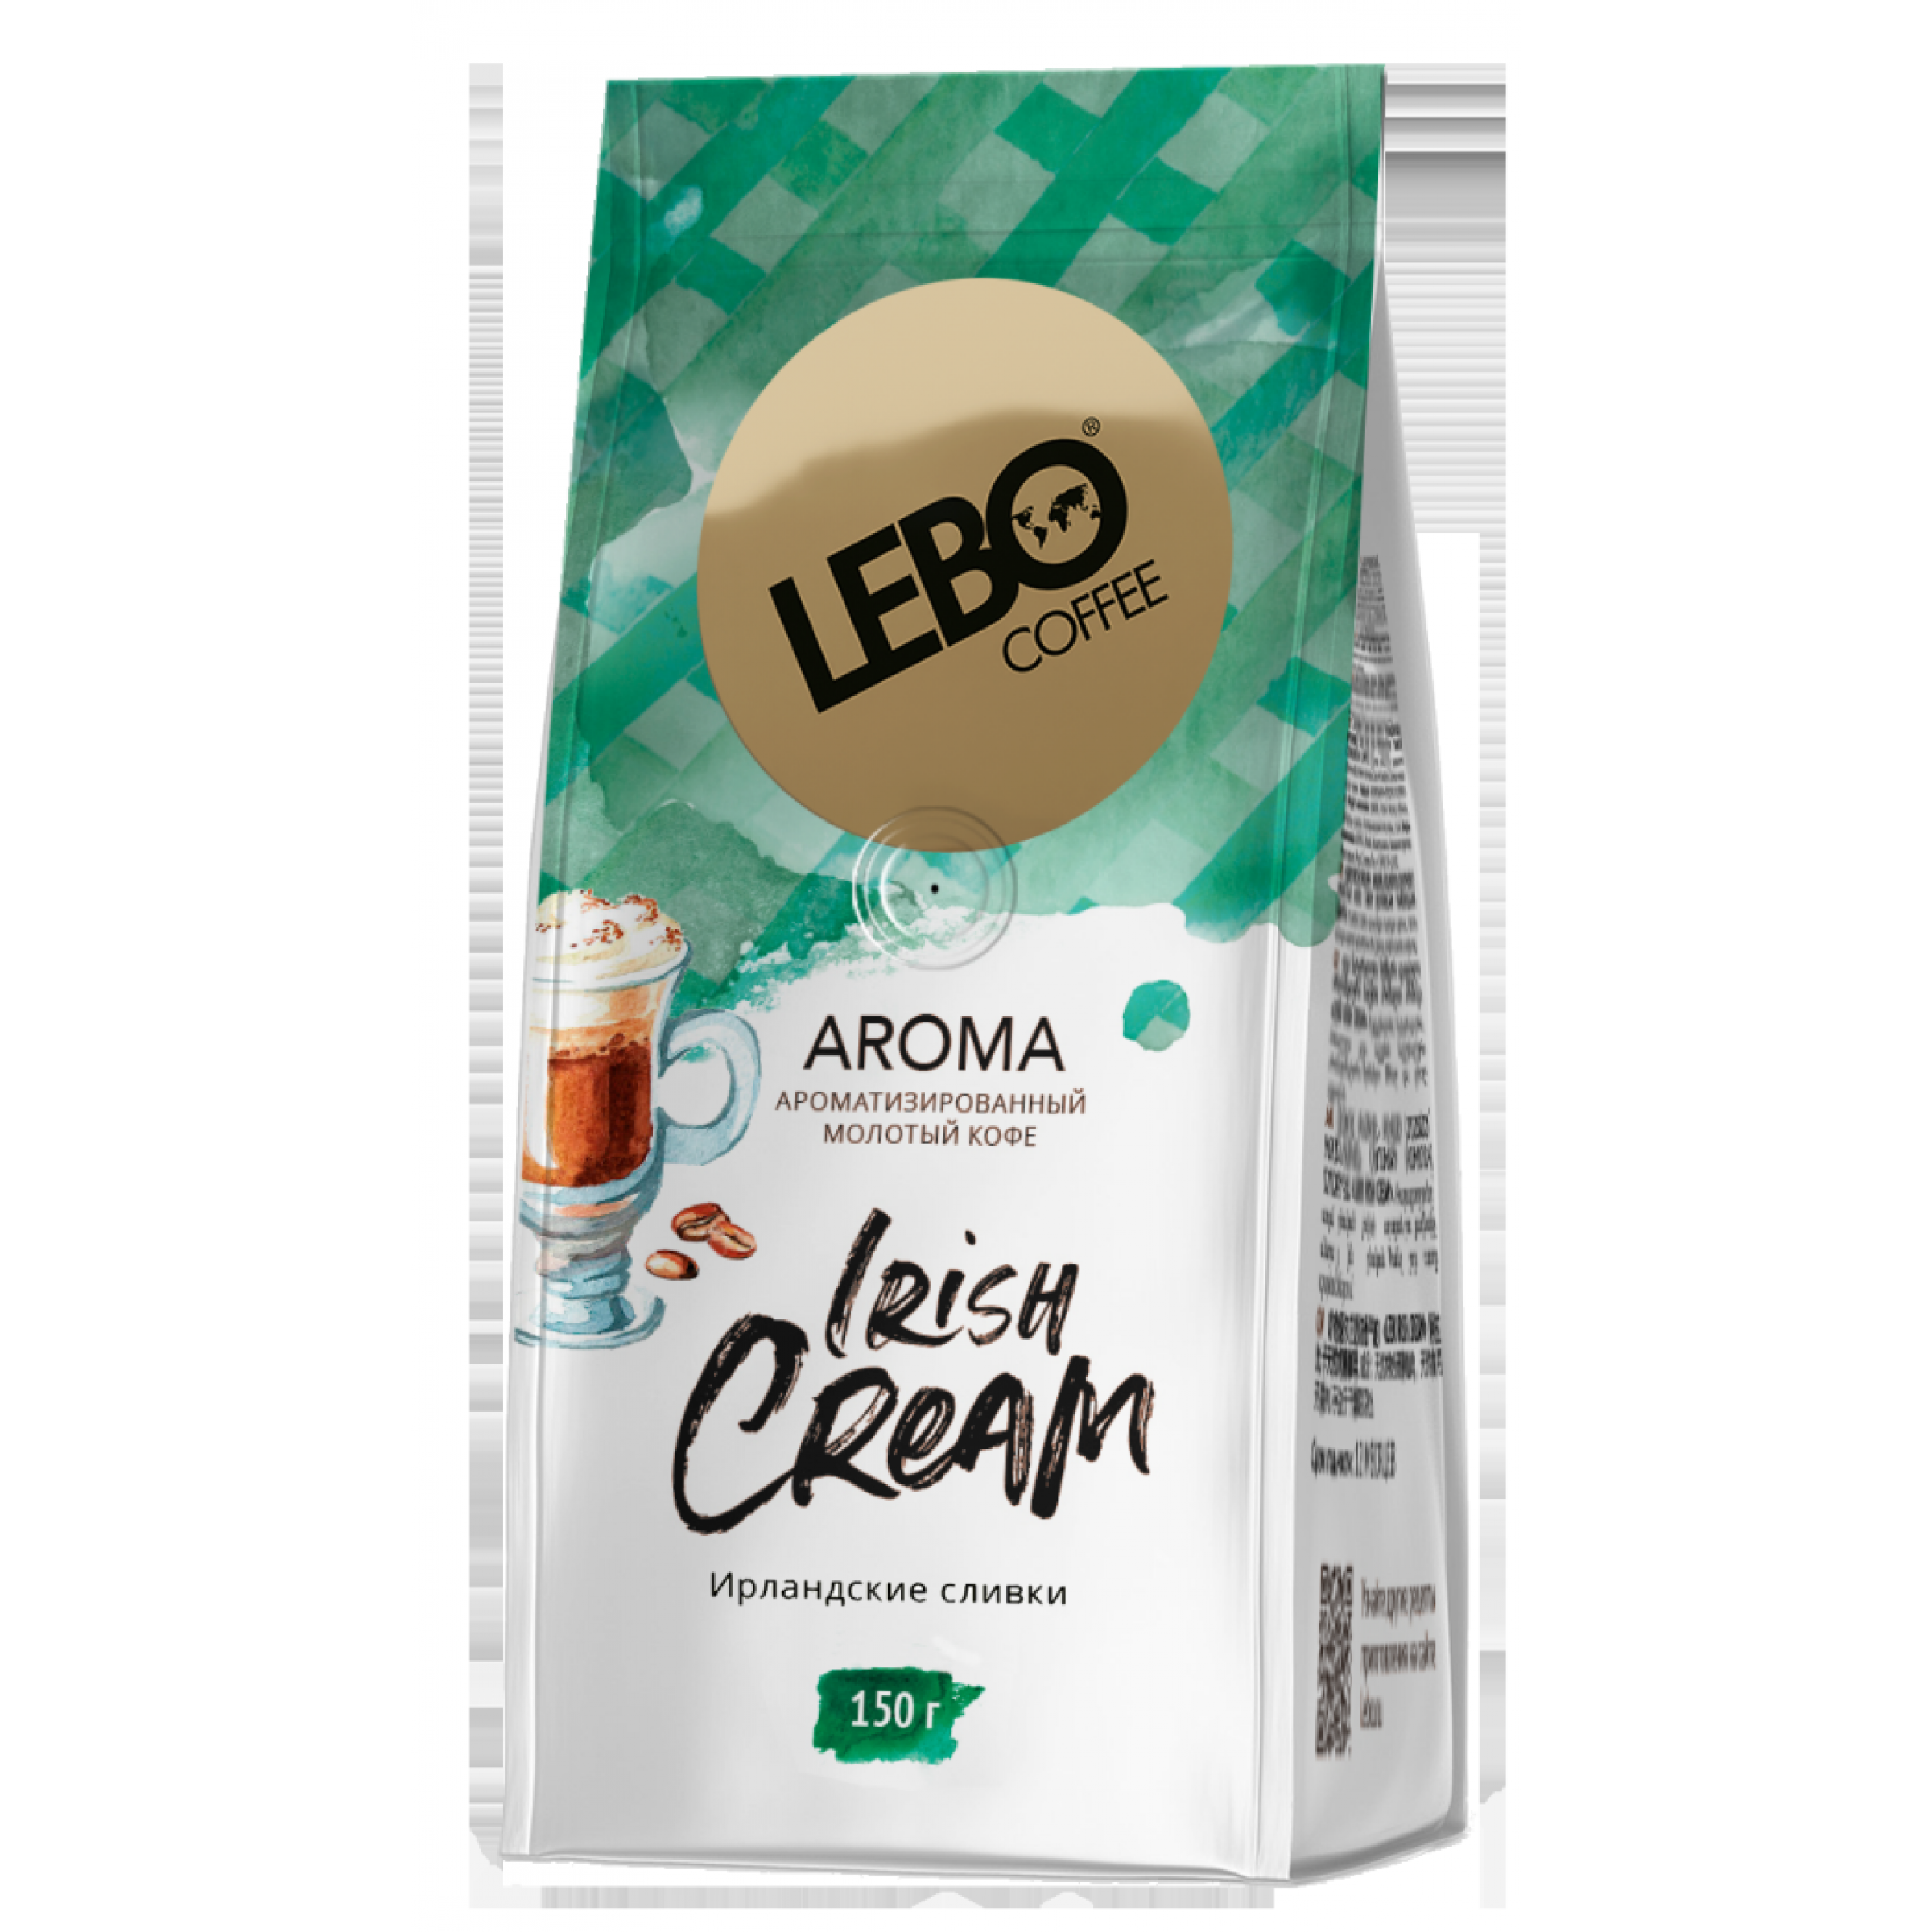 Ароматизированный молотый кофе для заваривания Lebo Aroma Irish Cream 150 г